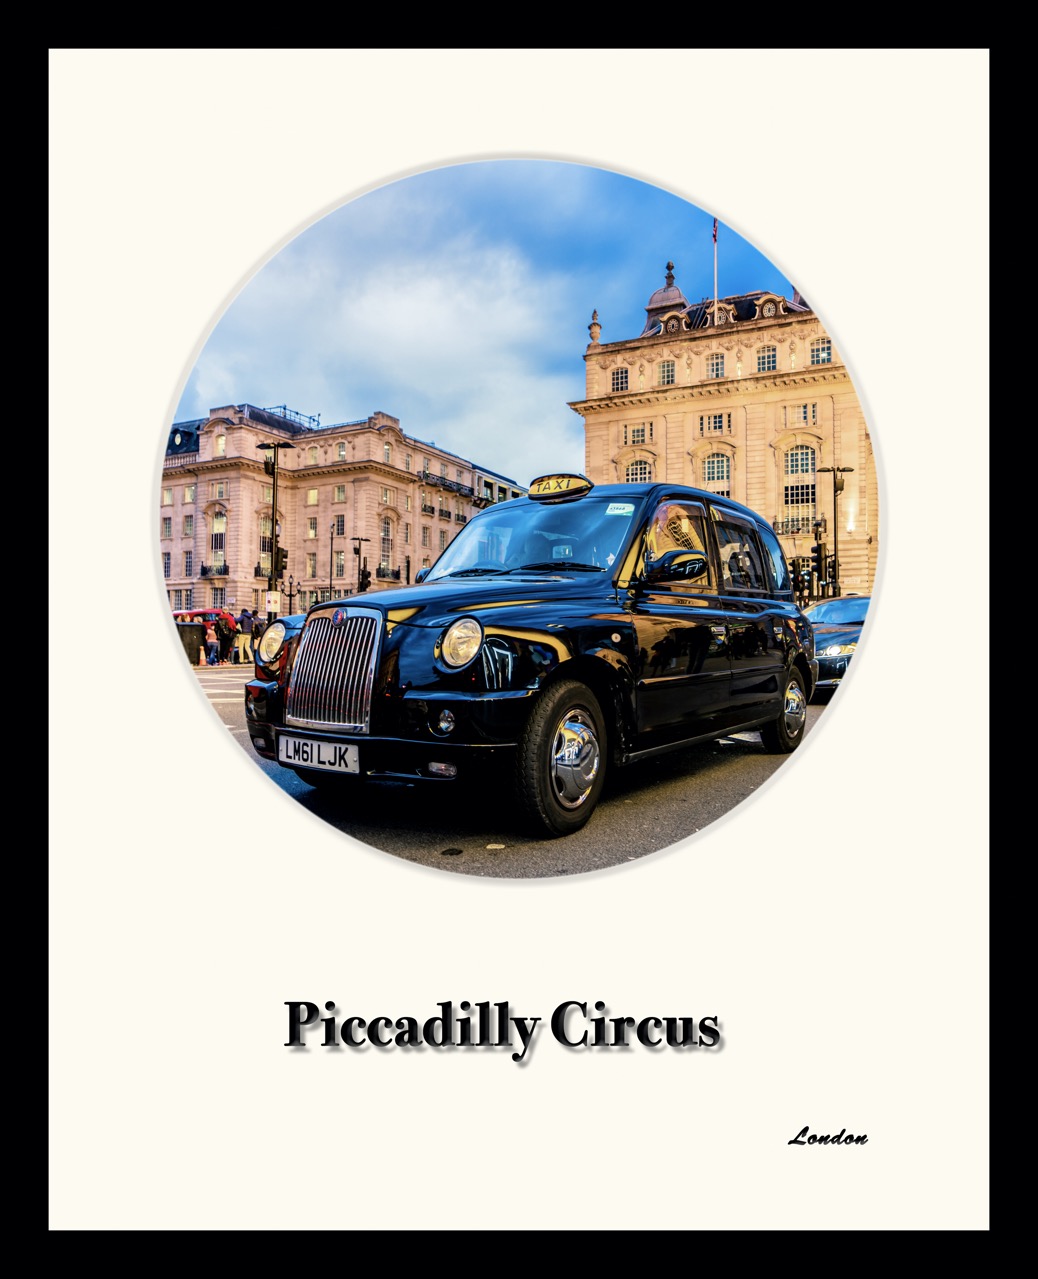 Motiv Piccadilly Circus mit London-Cab